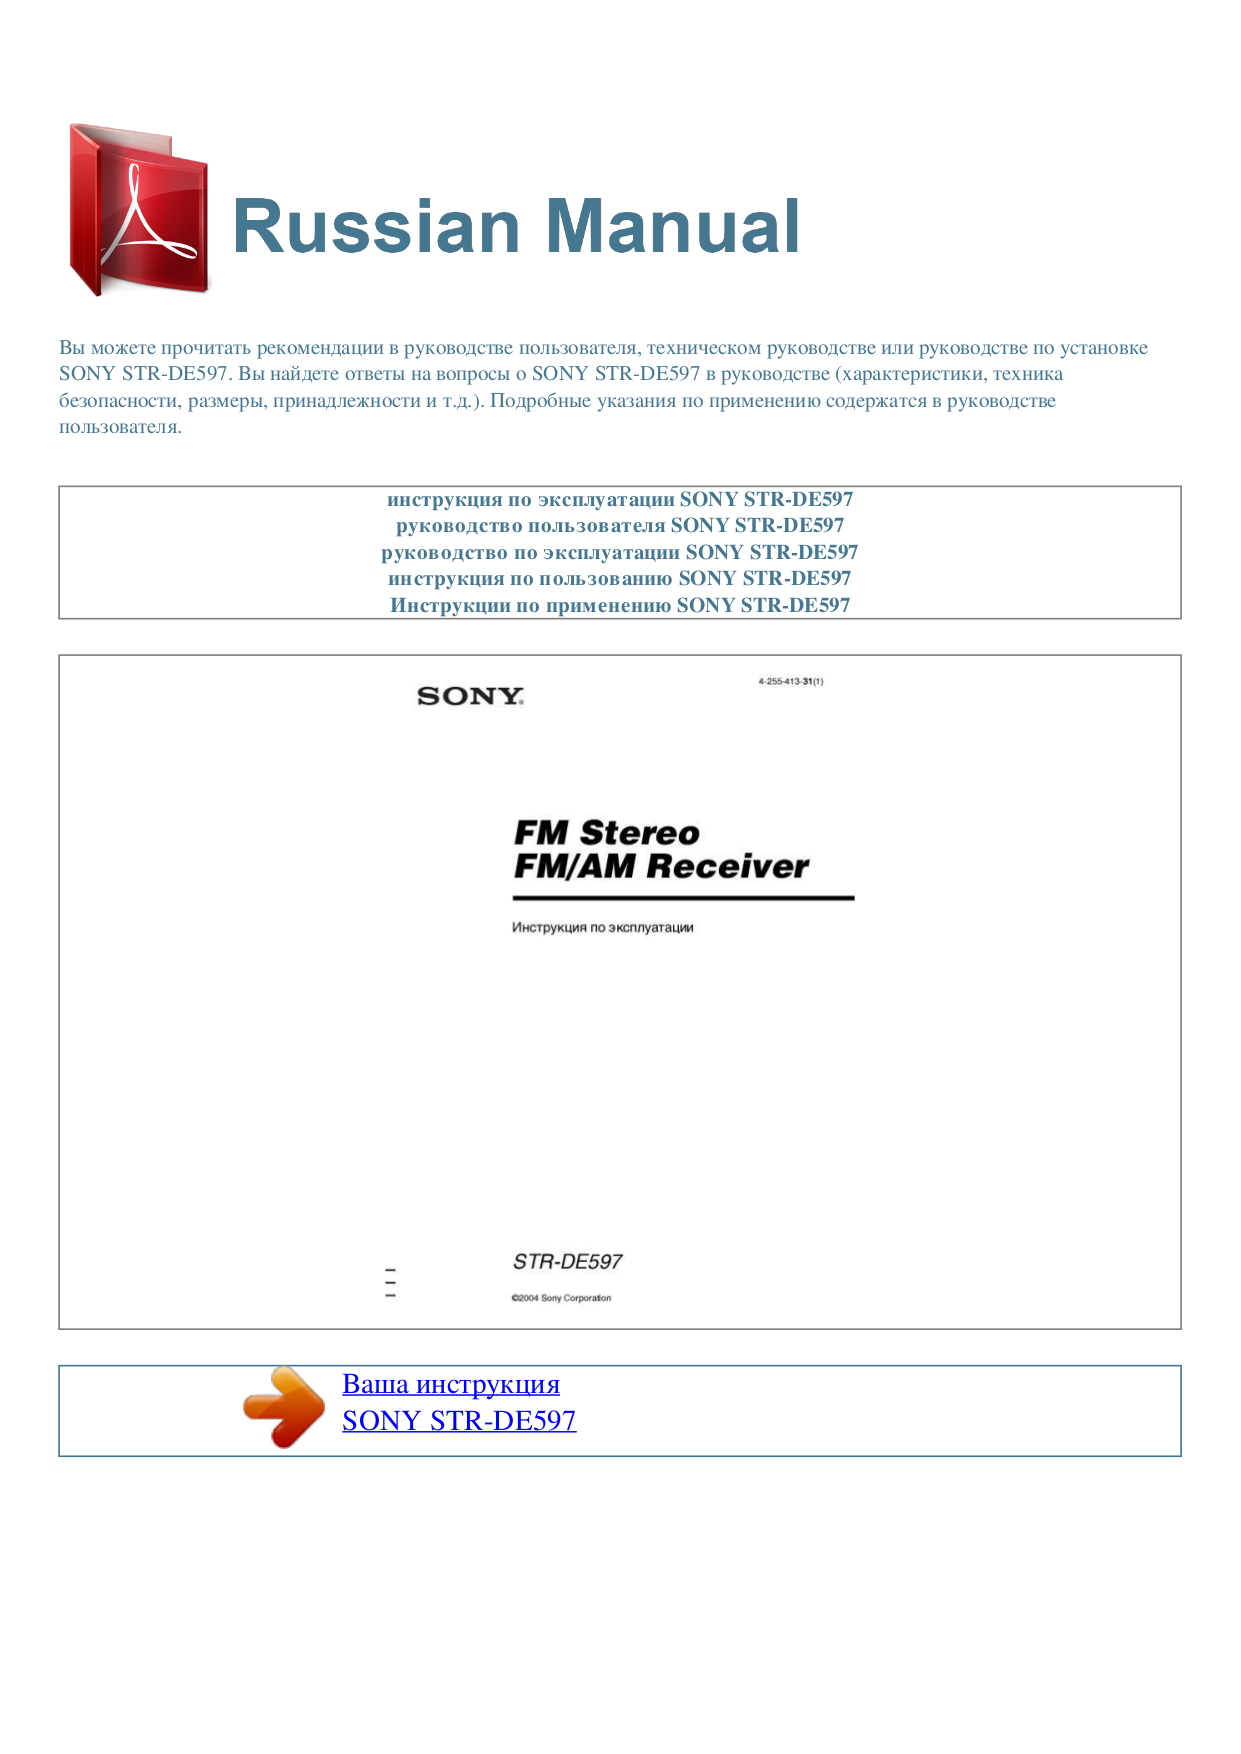 Download free pdf for Sony STR-DE597 Receiver manual